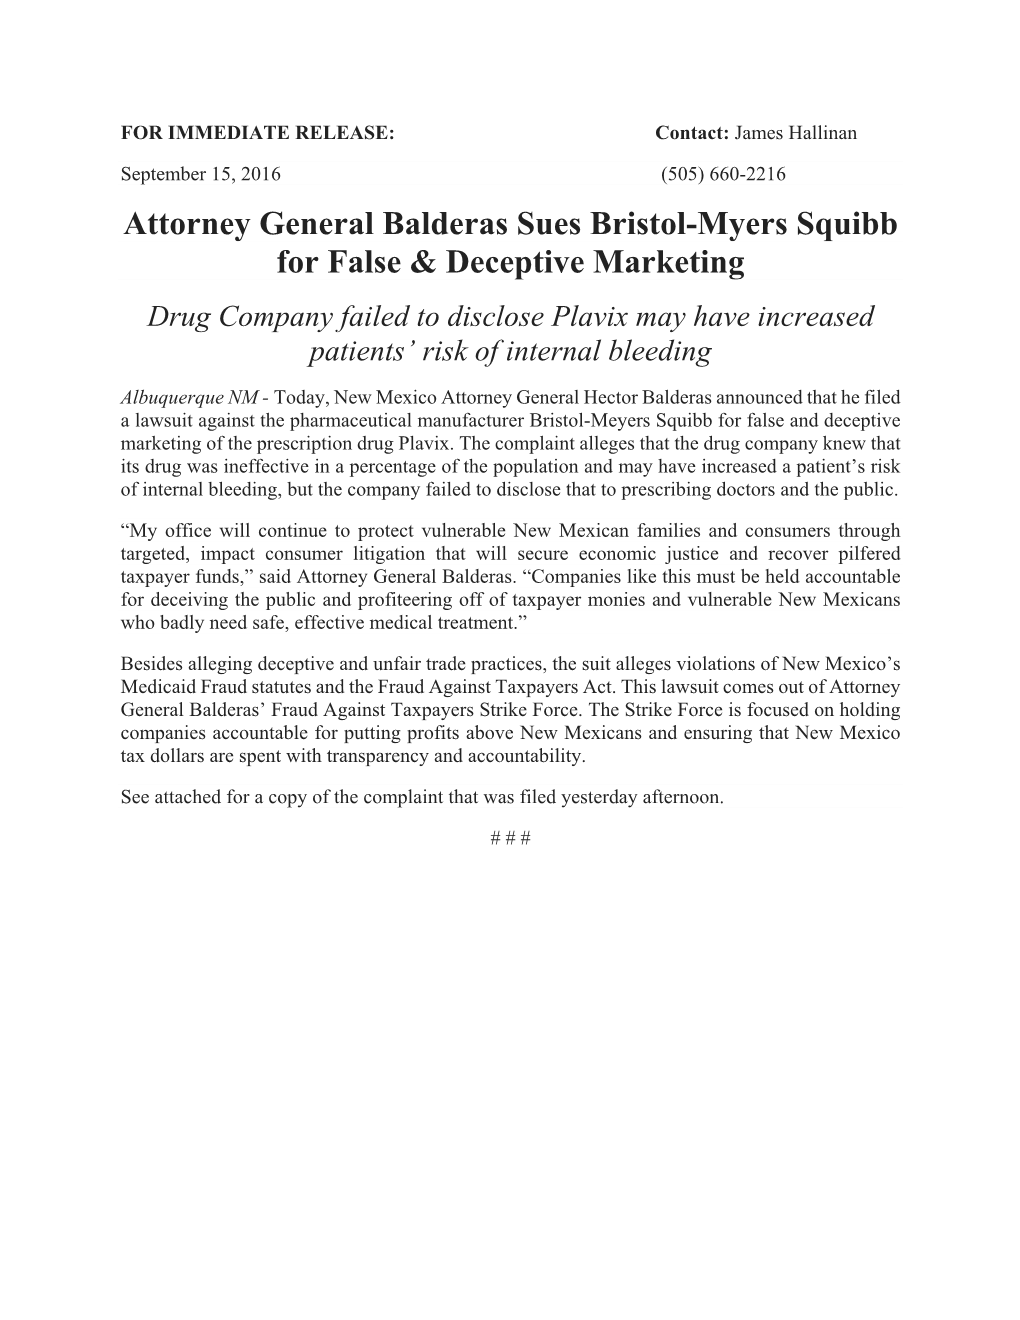 Attorney General Balderas Sues Bristol-Myers Squibb for False & Deceptive Marketing